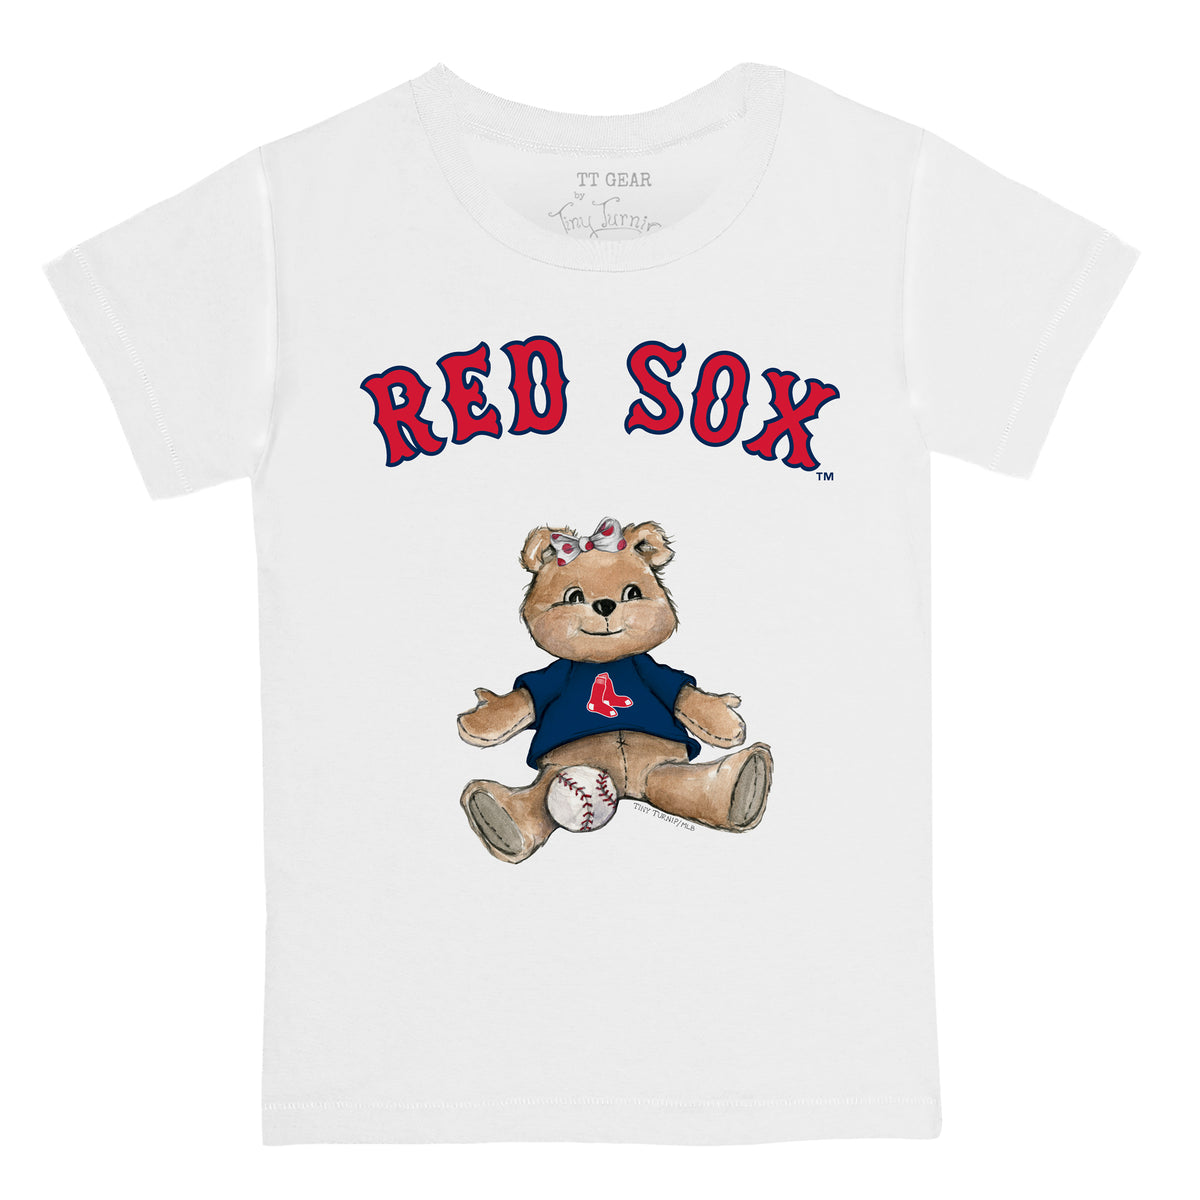 Tiny Turnip Boston Red Sox TT Rex Tee Shirt Women's 3XL / Red